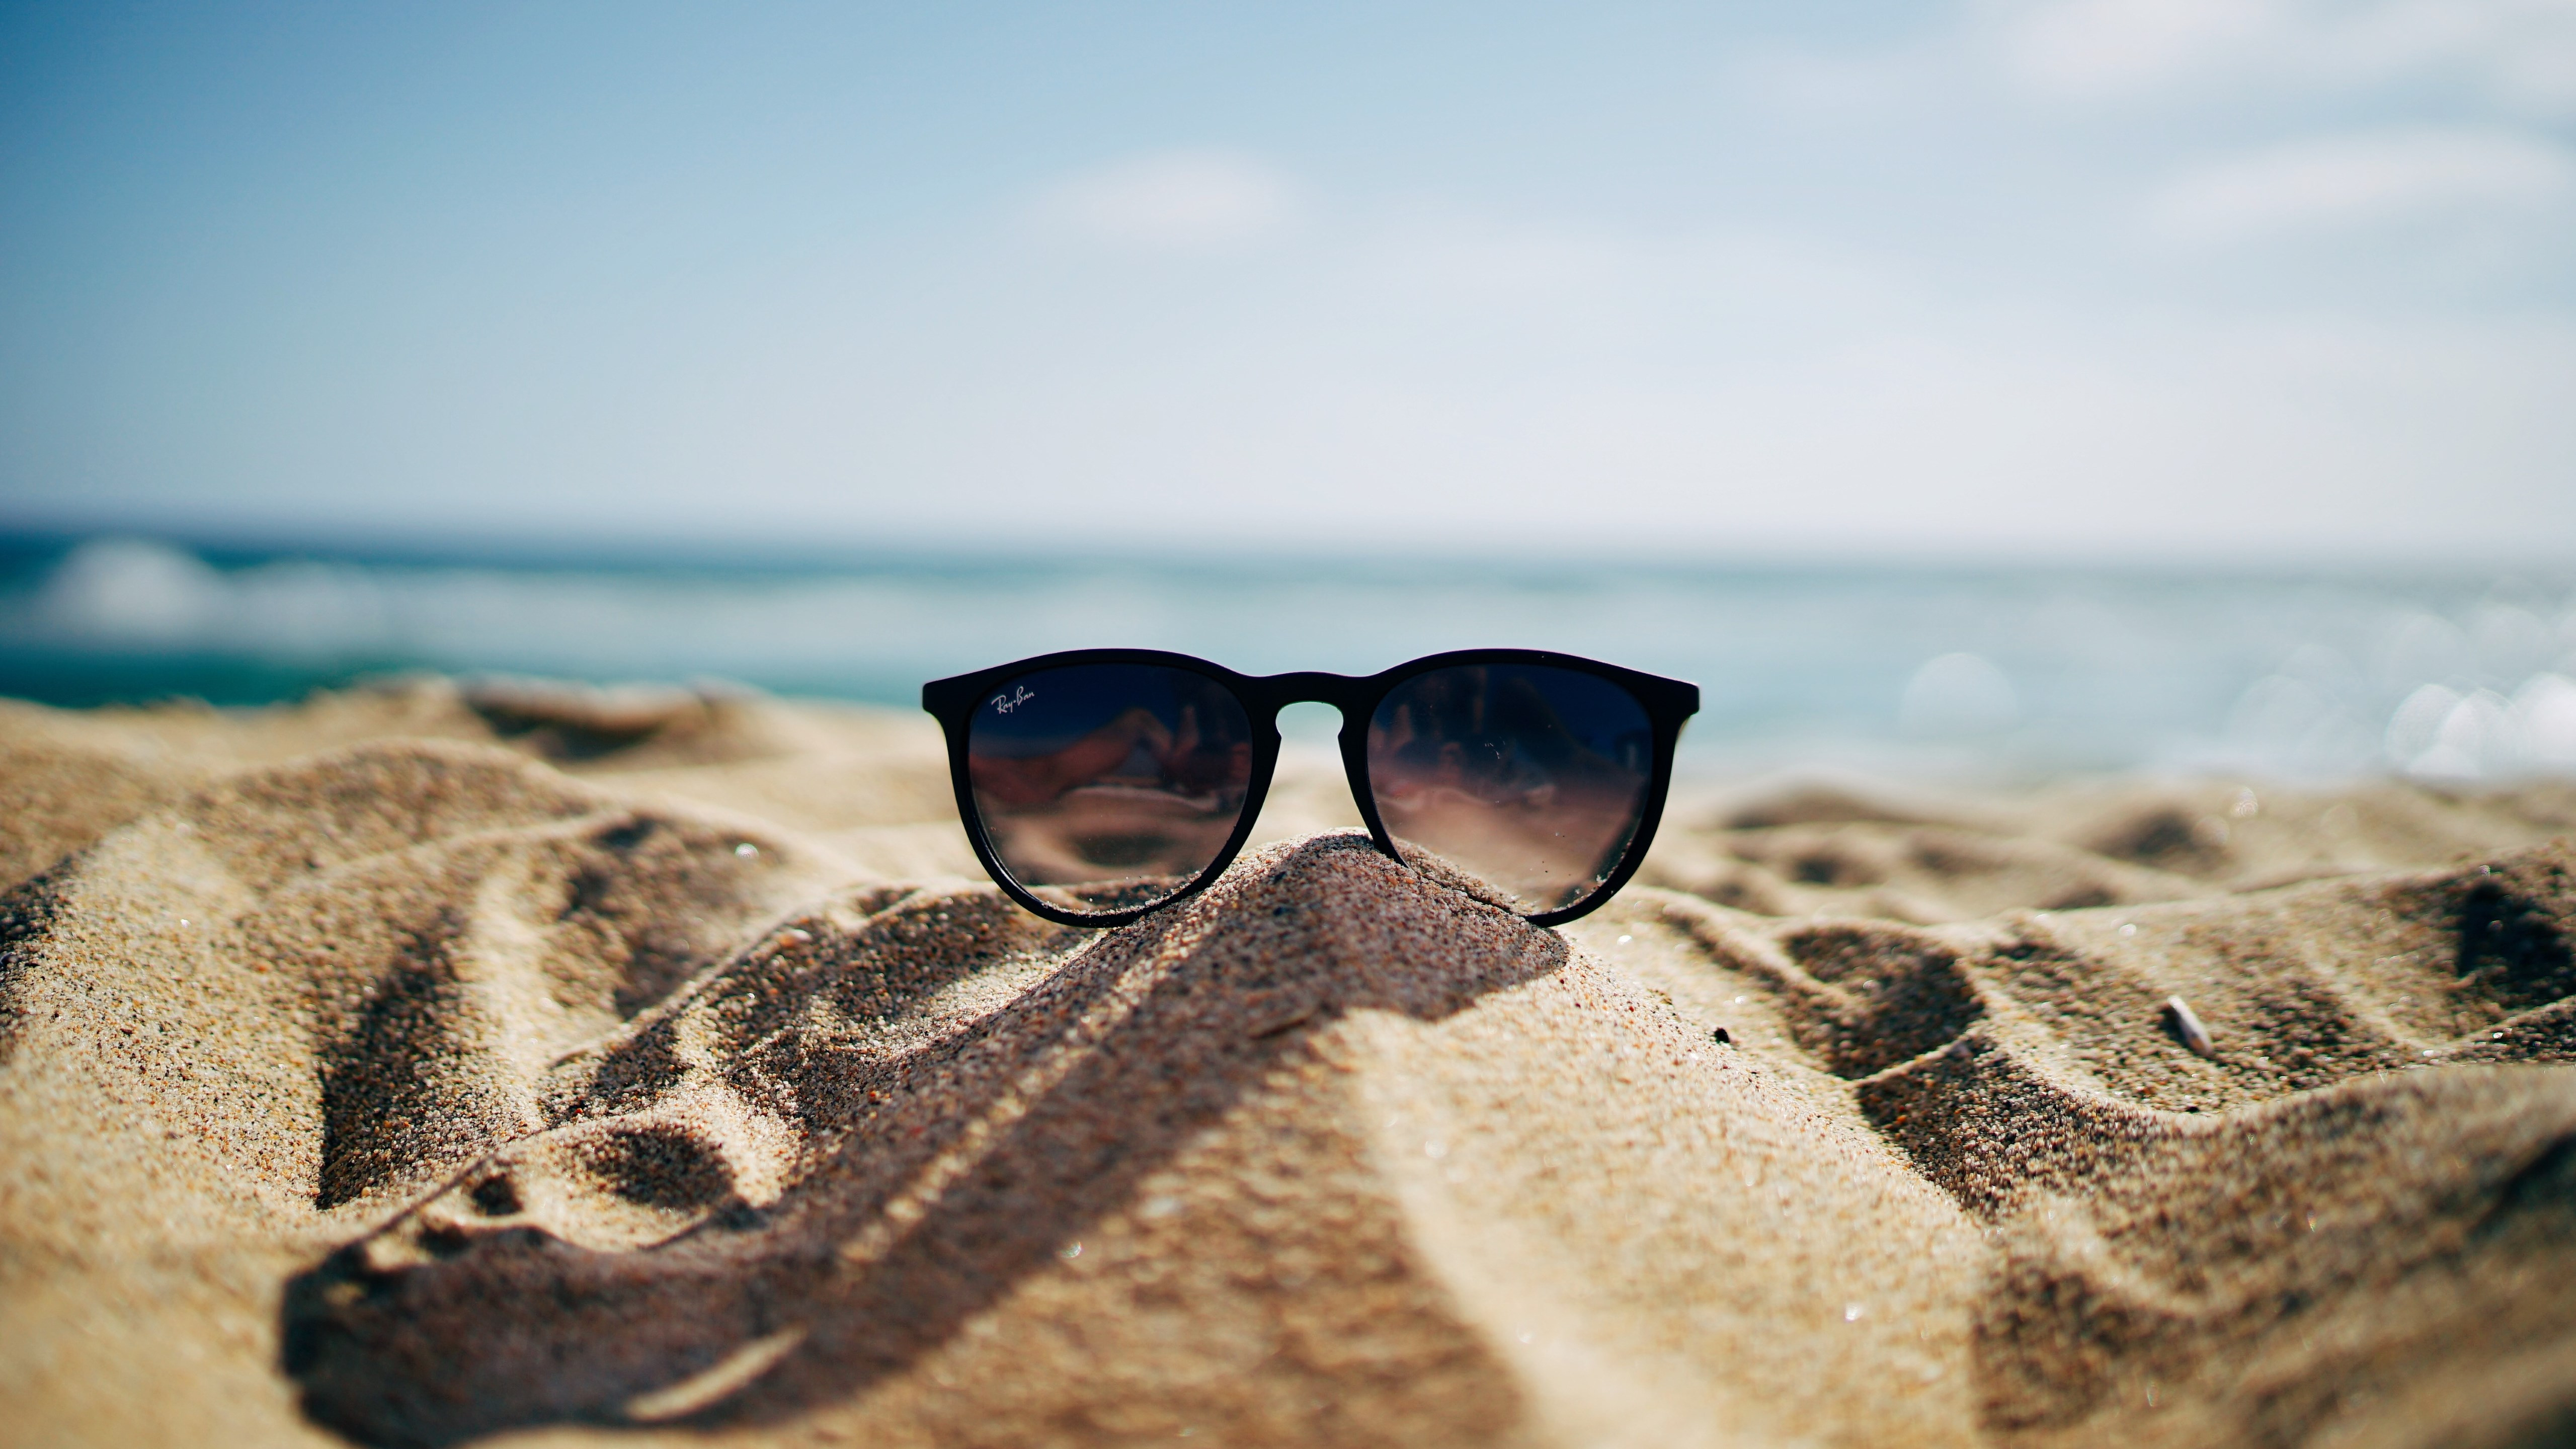 Ray Ban sunglasses on hot sand beach wallpaper 5120x2880